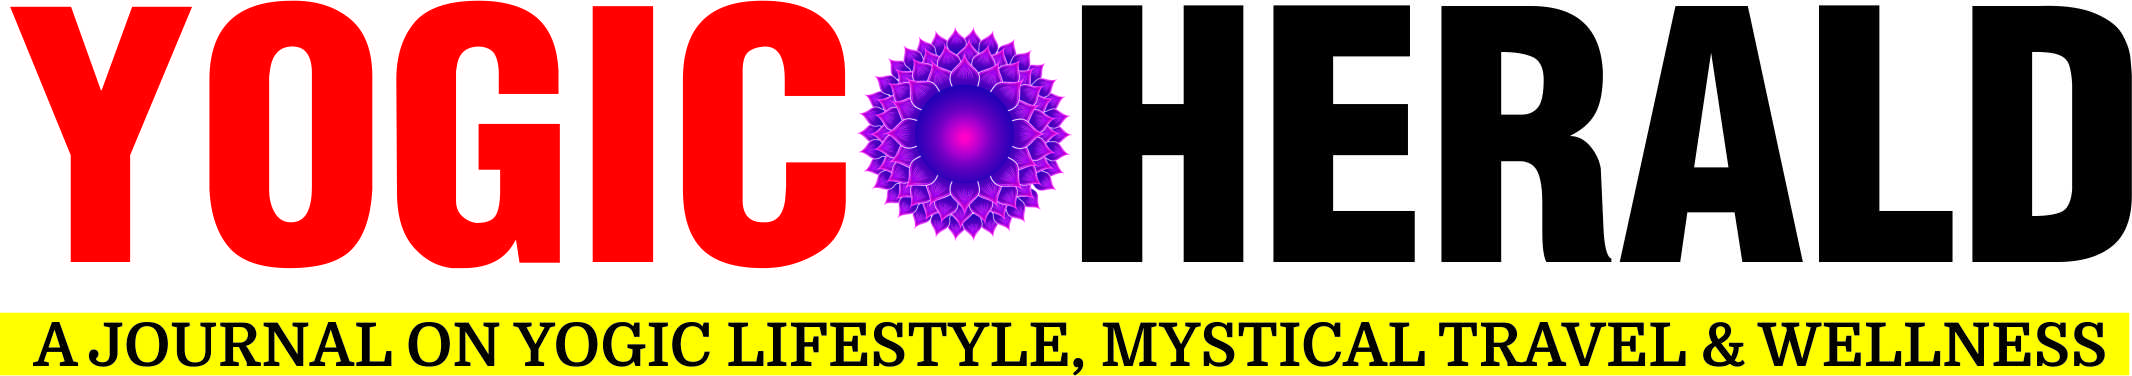 Yogic Herald - A Journal on Yogic Lifestyle, Mystical Travel & Wellness
